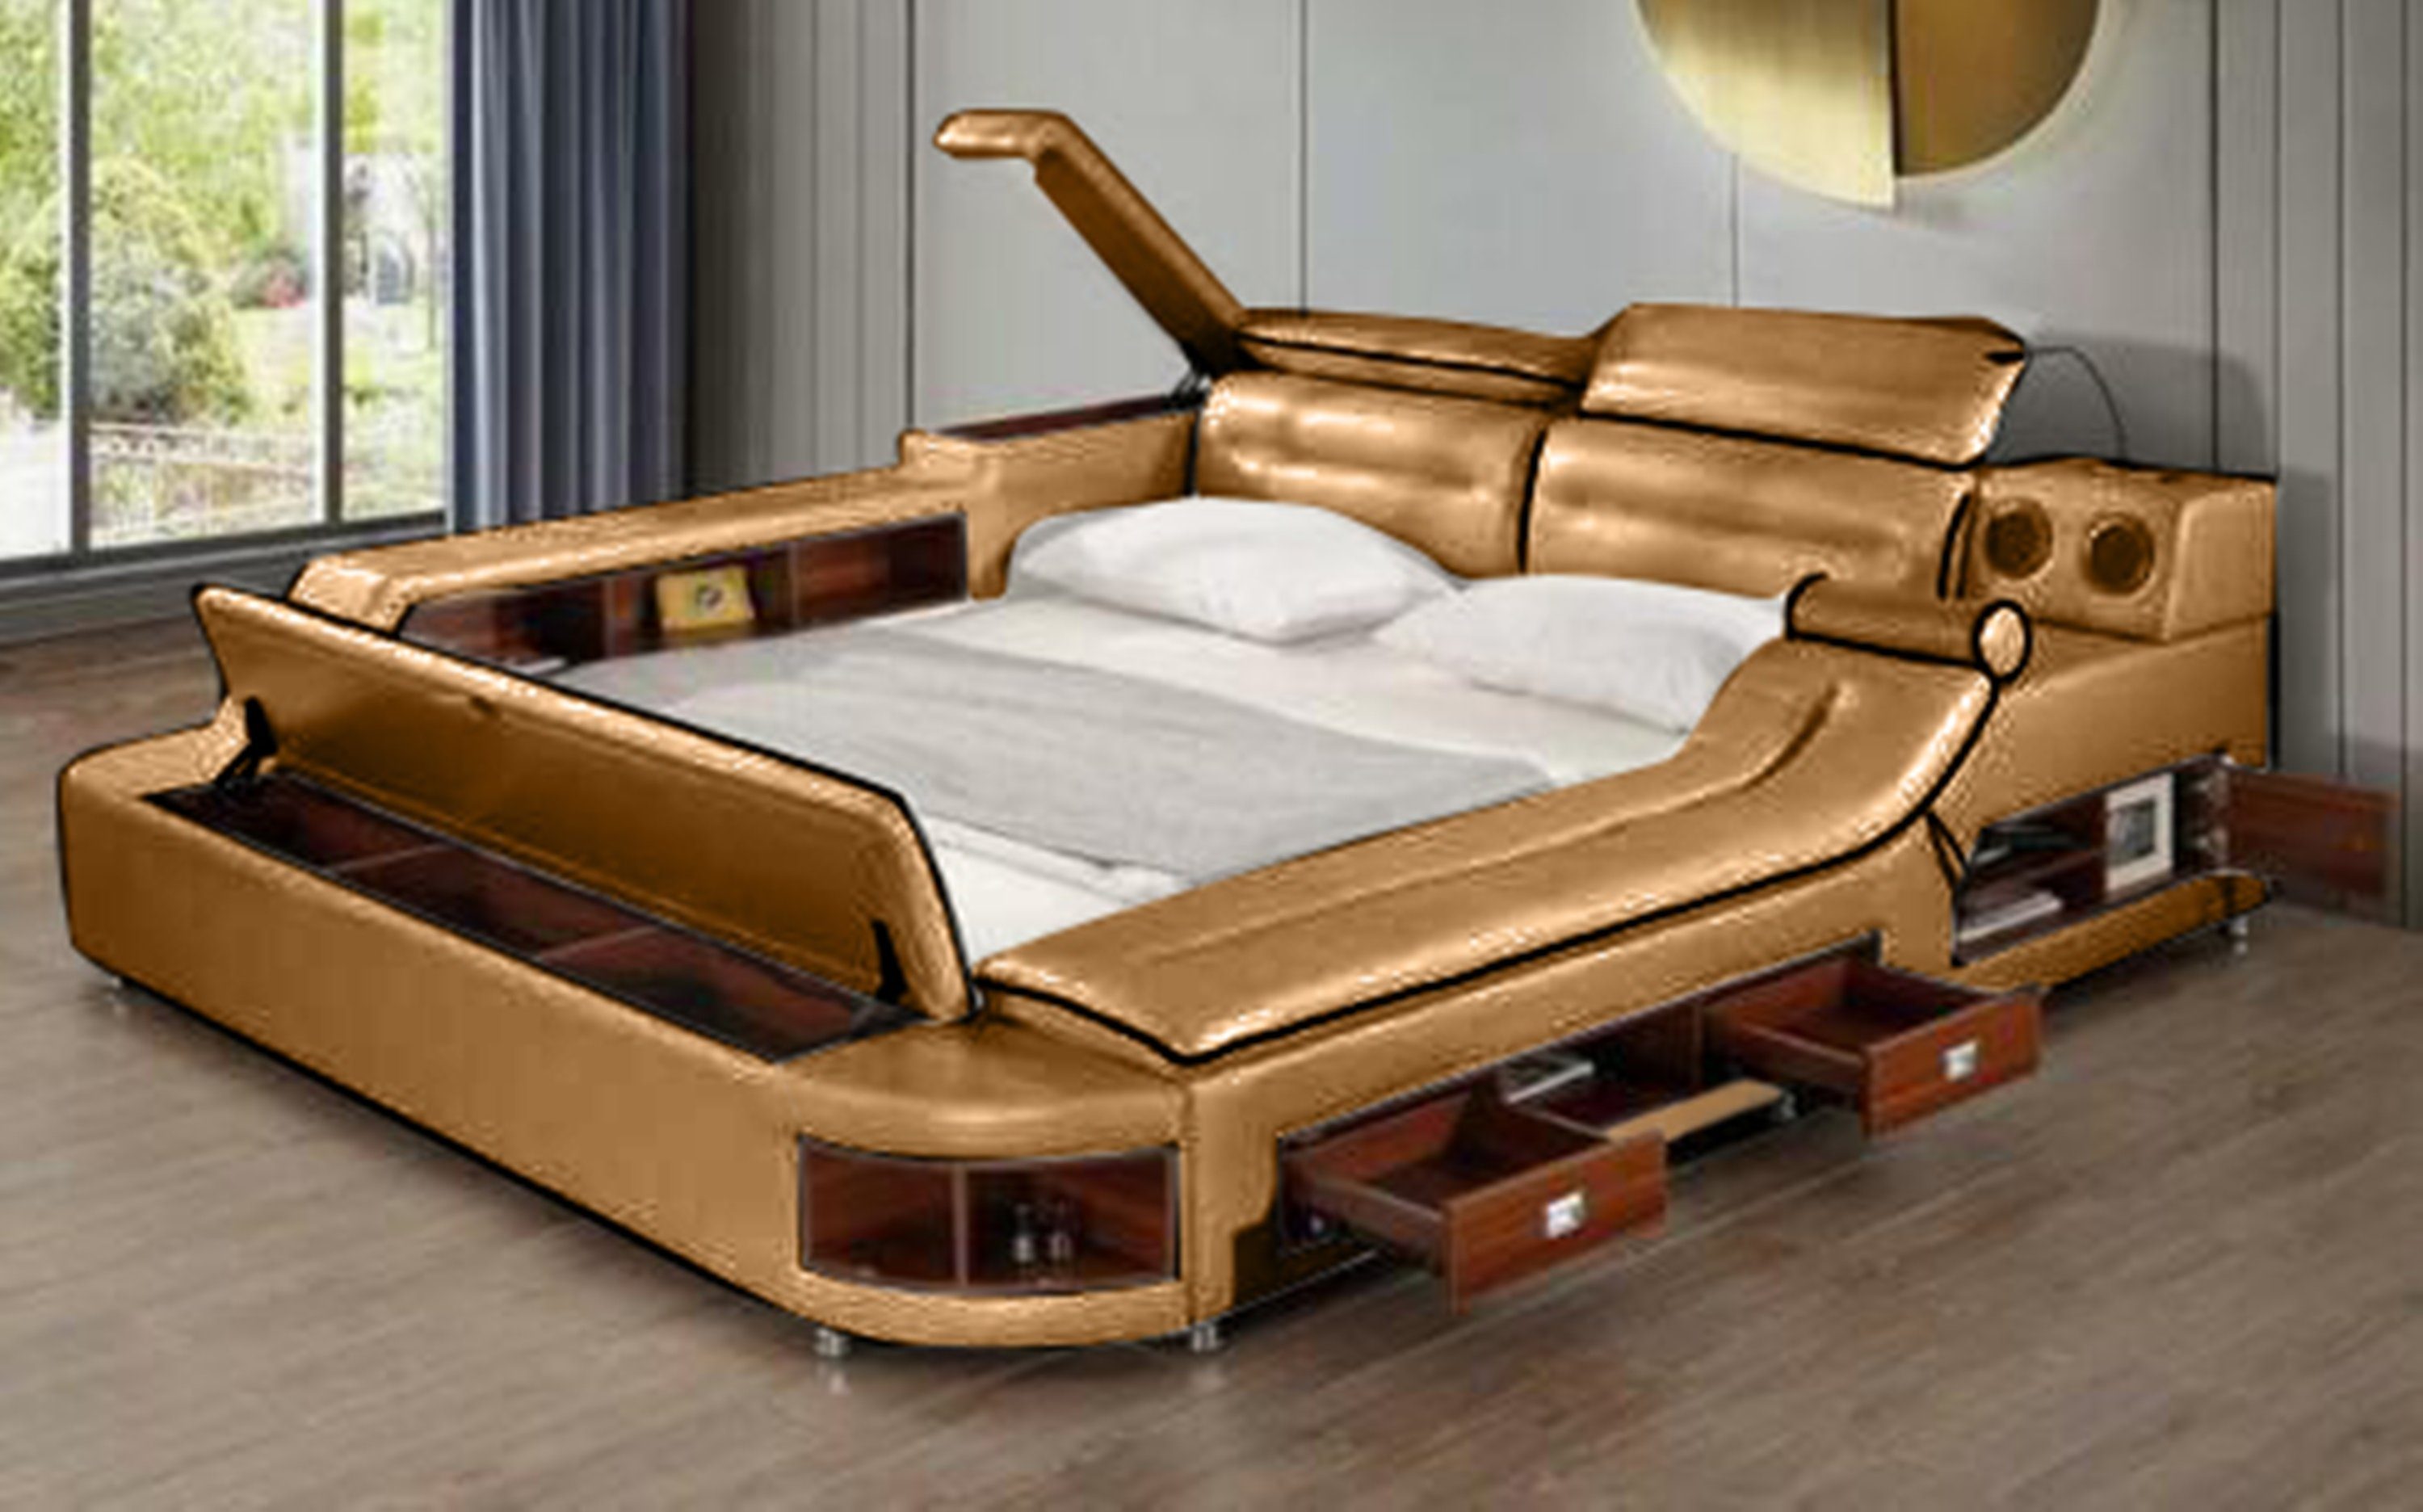 JVmoebel Bett Luxus Bett Leder Betten 180x200 Multifunktion Schlafzimmer Sofort (Multifunktionbett), Made in Europa